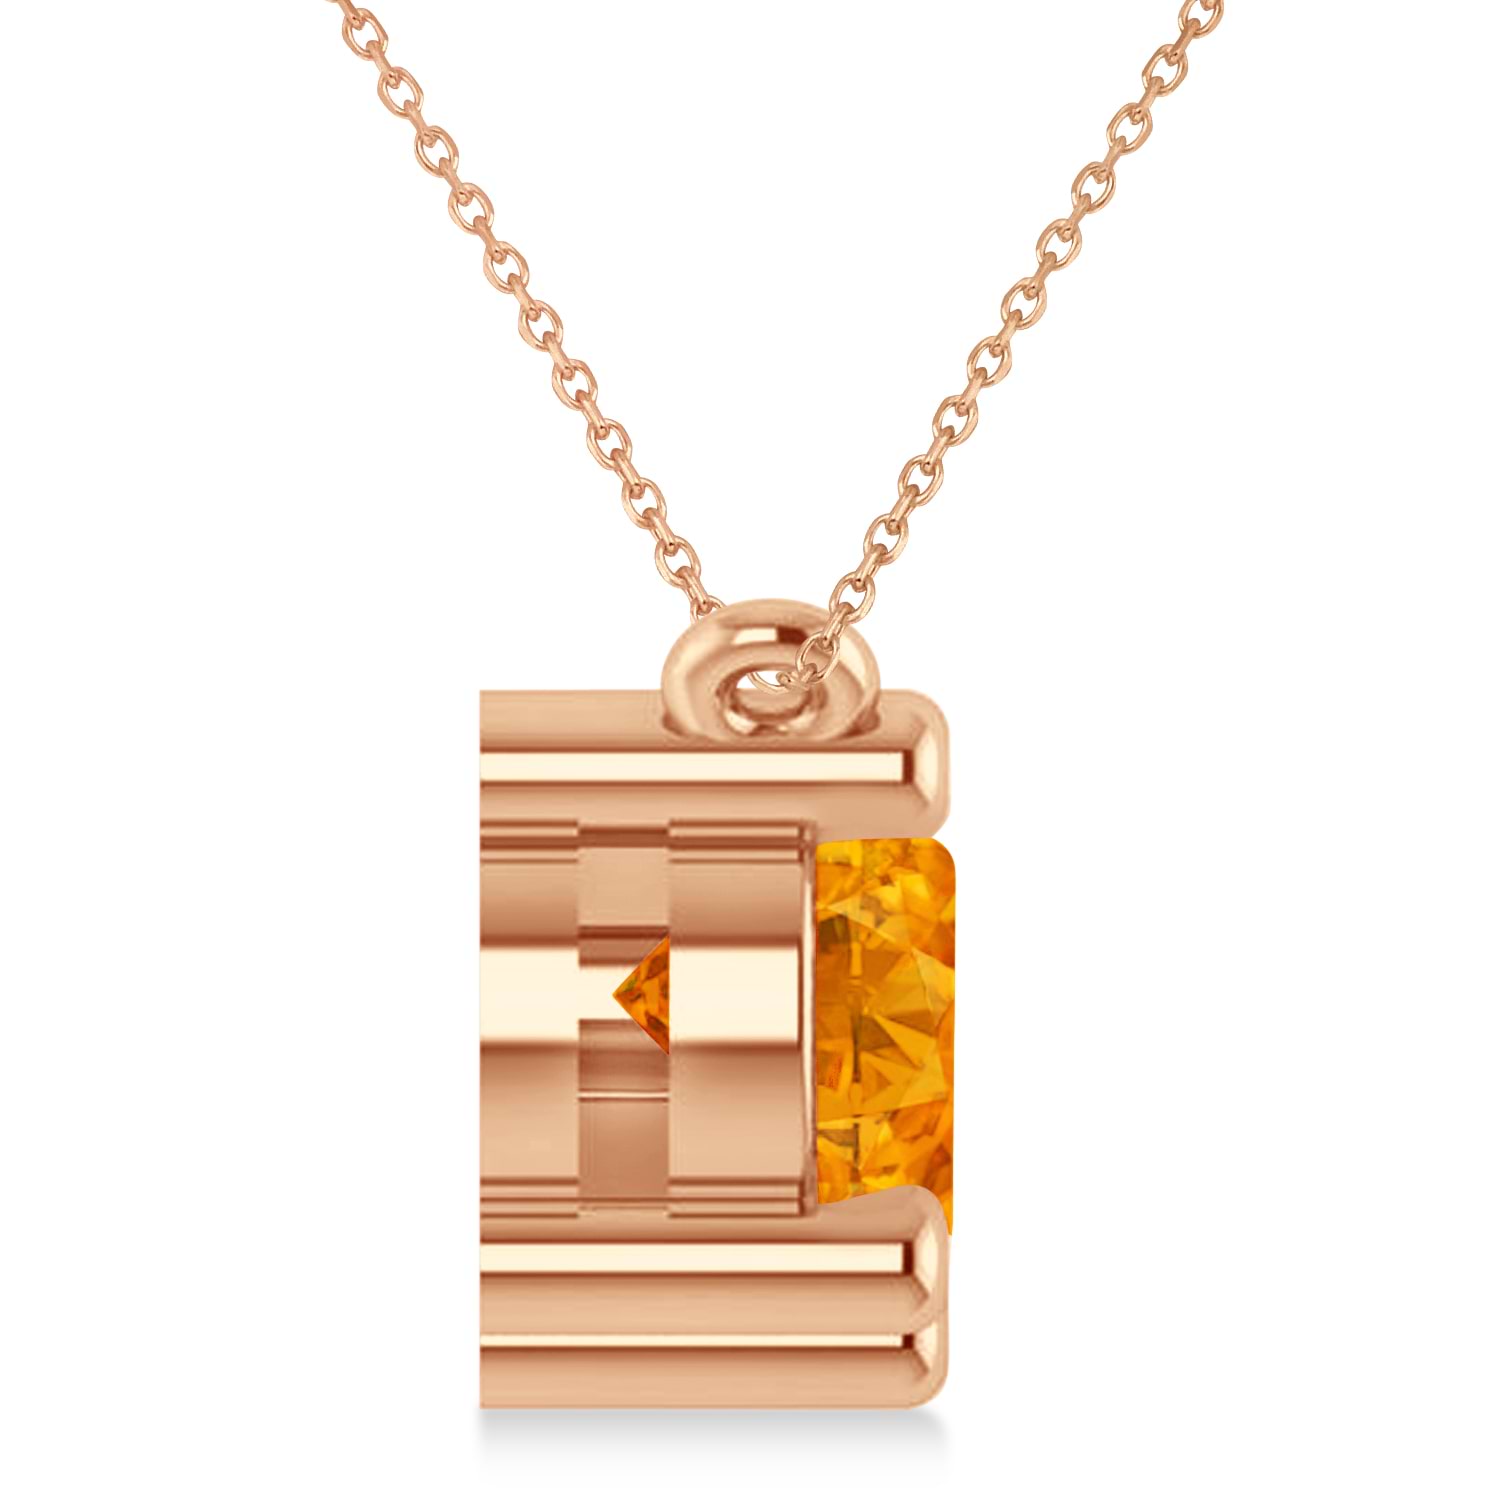 Three Stone Diamond & Citrine Pendant Necklace 14k Rose Gold (3.00ct)